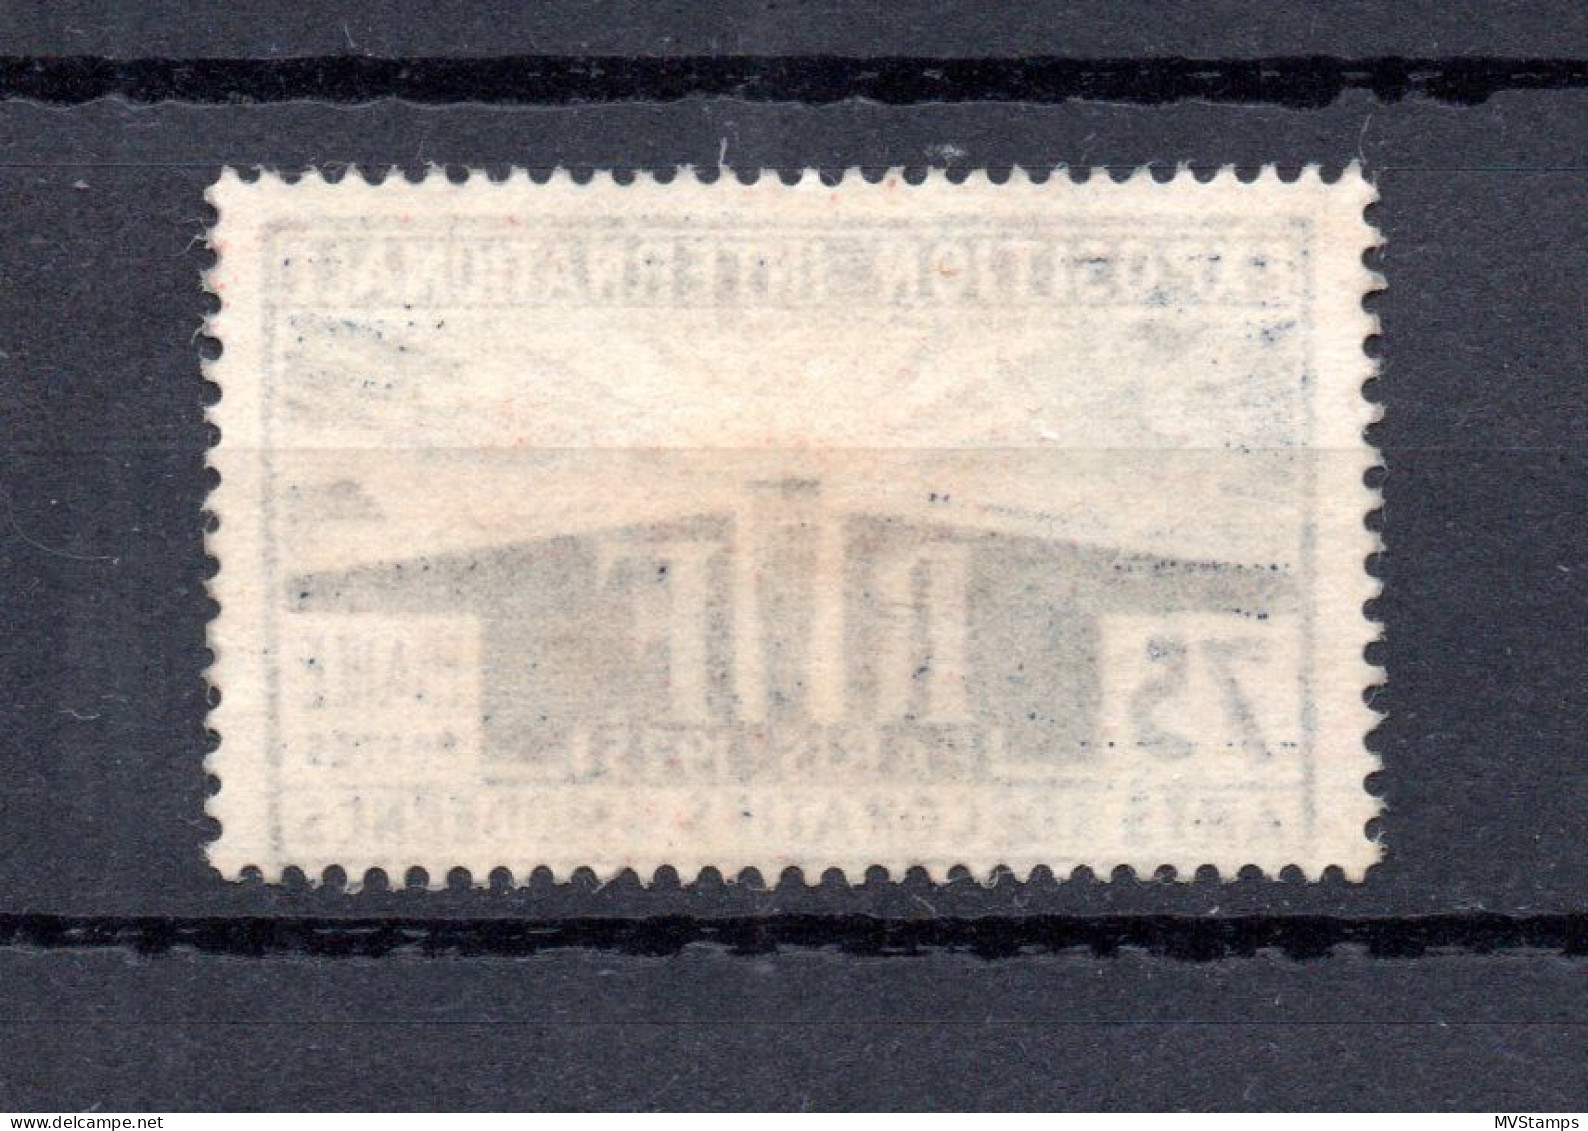 France 1925 Old Art Exhibition Paris Stamp (Michel 180) Nice MNH - Unused Stamps